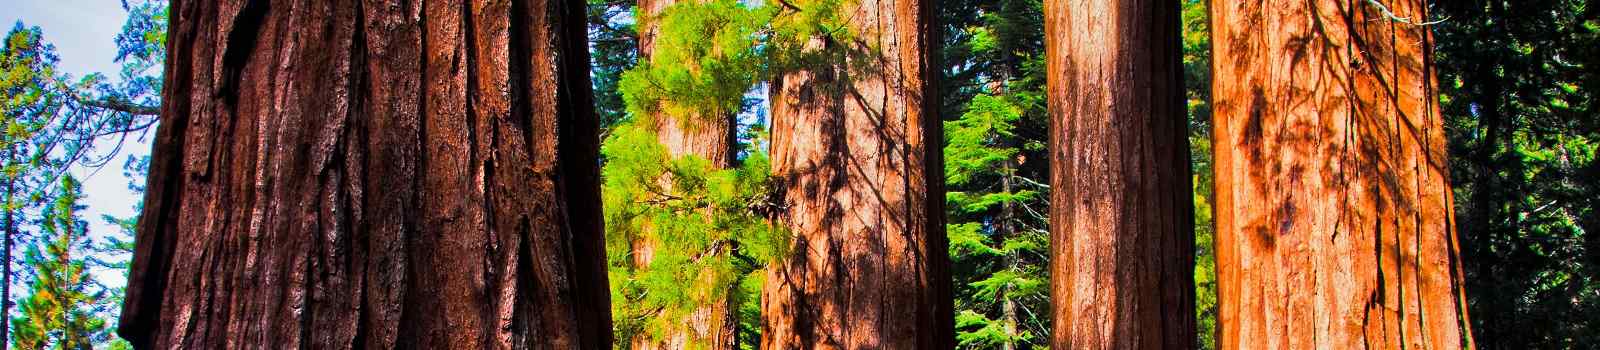 PANORAMA-SUD-WEST  Kalifornien Yosemite NP GiantSequoias 109335494